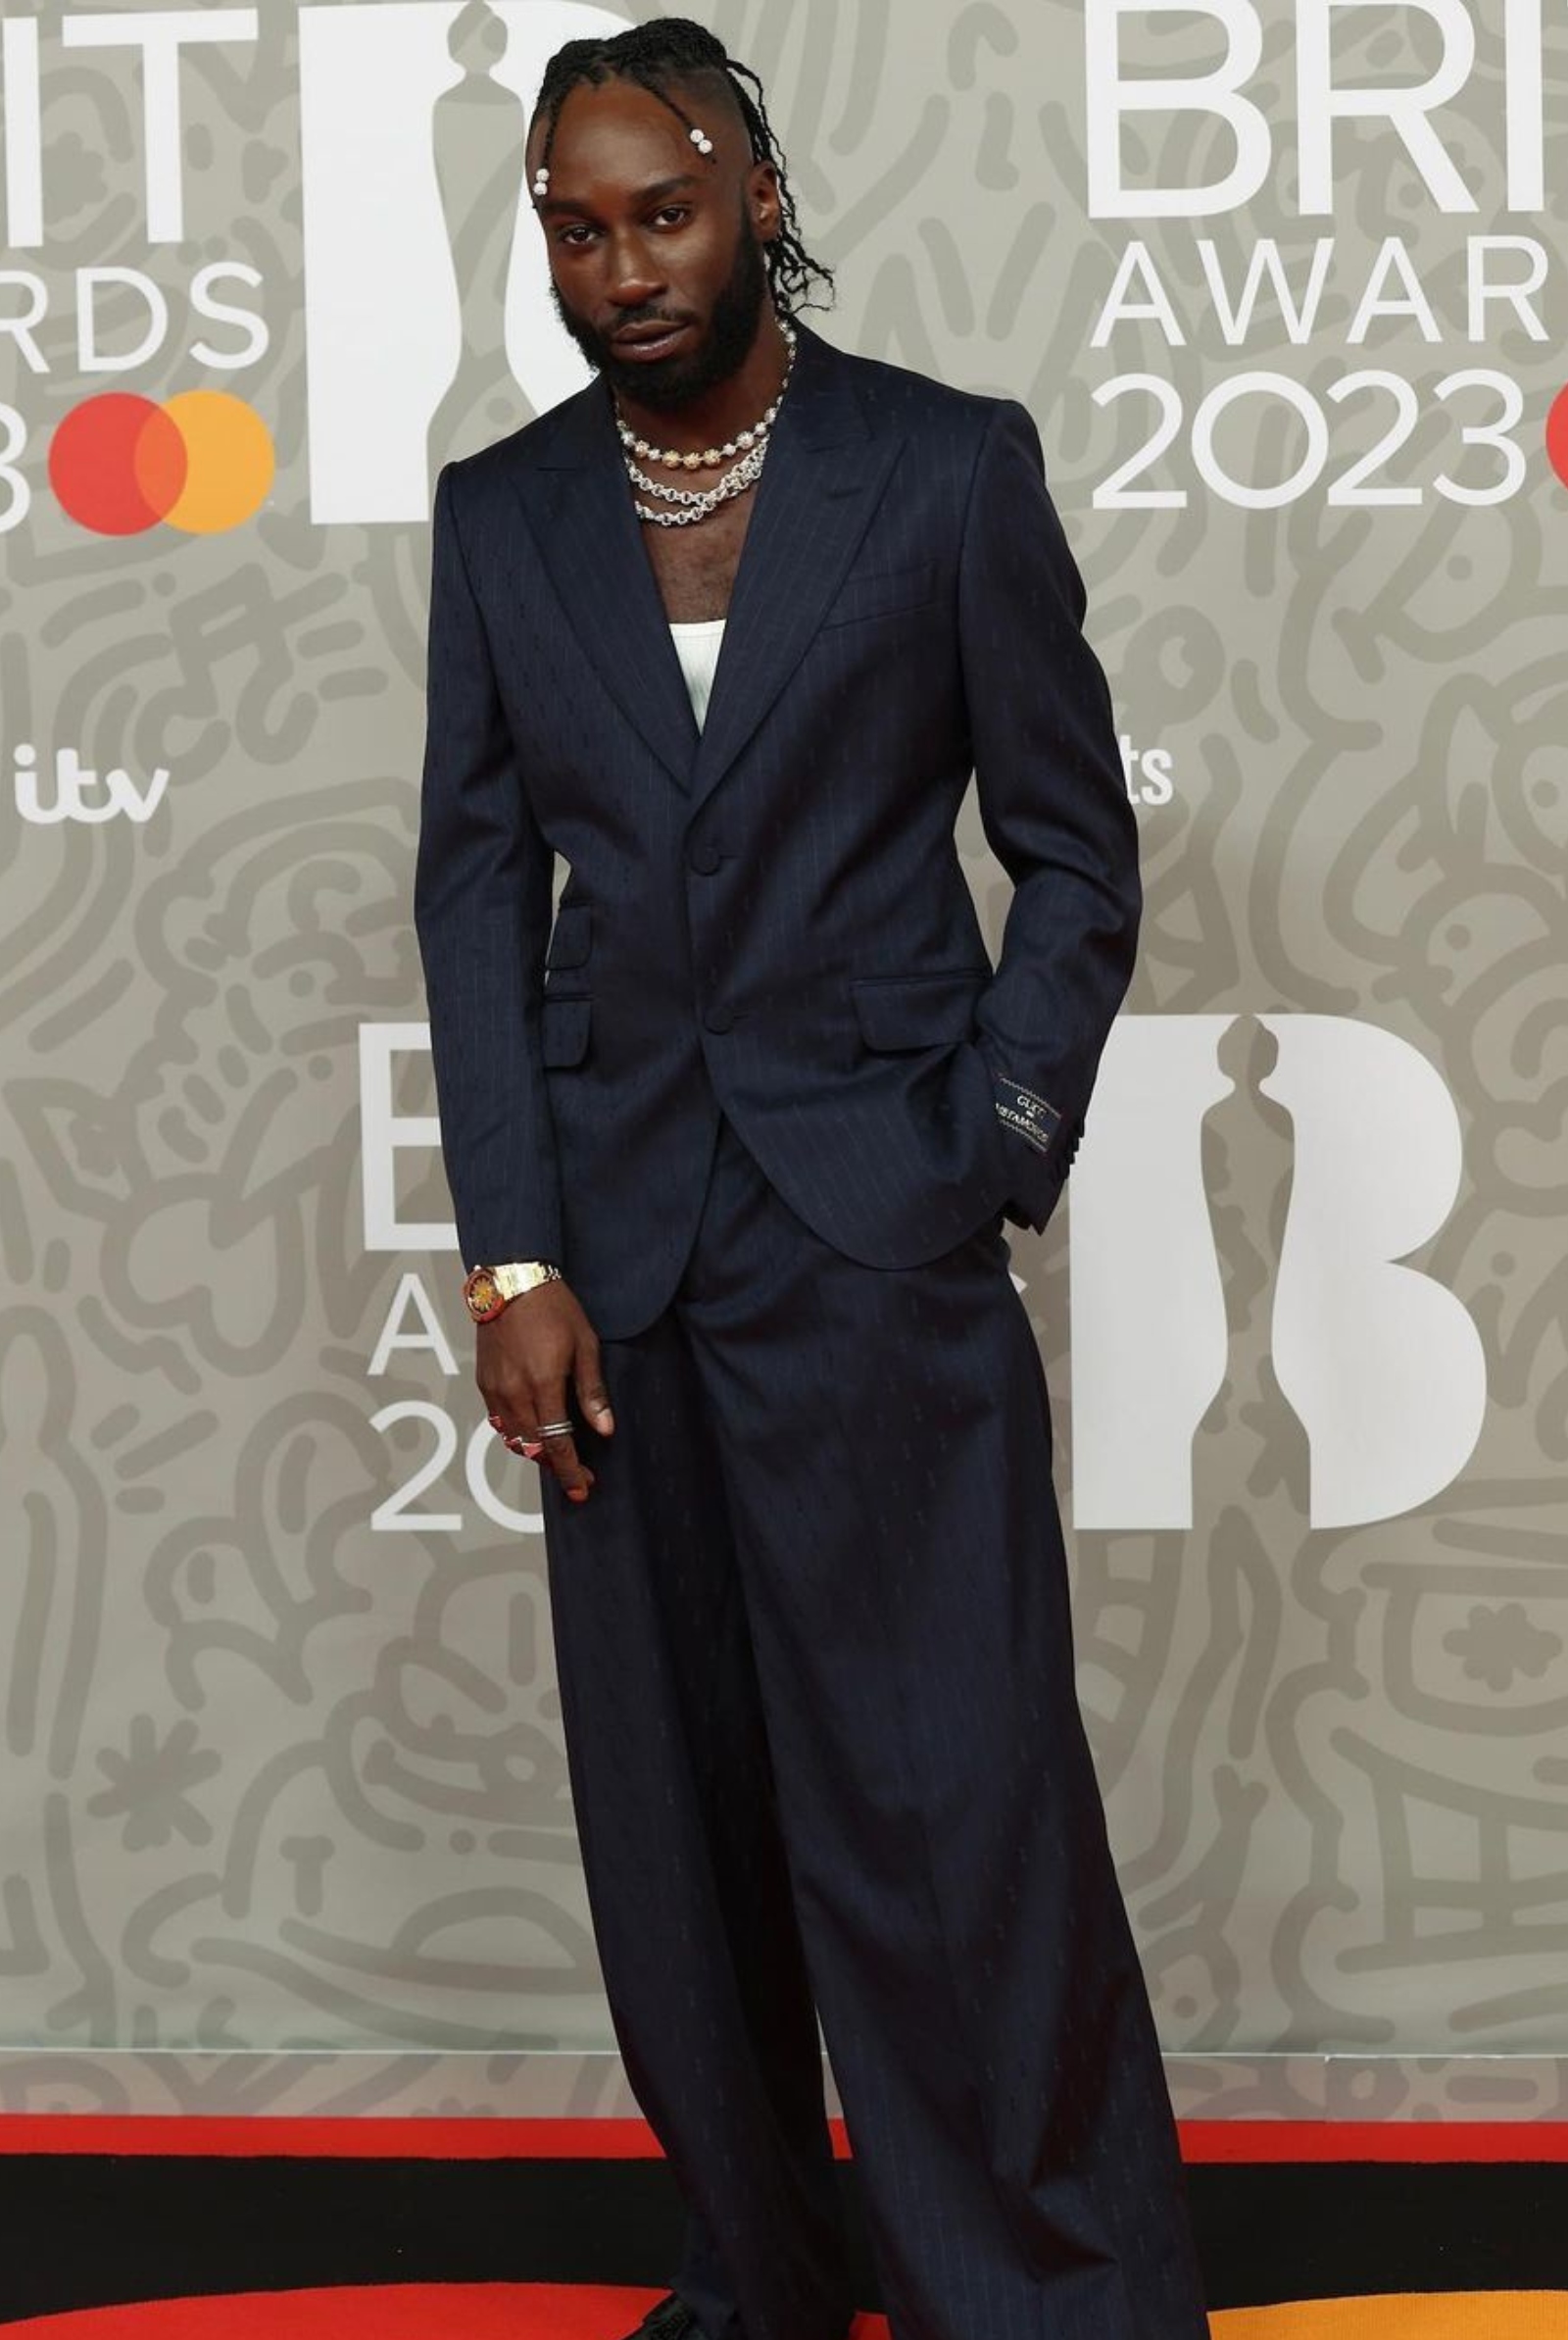 Best Dressed Men at the 2023 Brit Awards - Kojey Radical